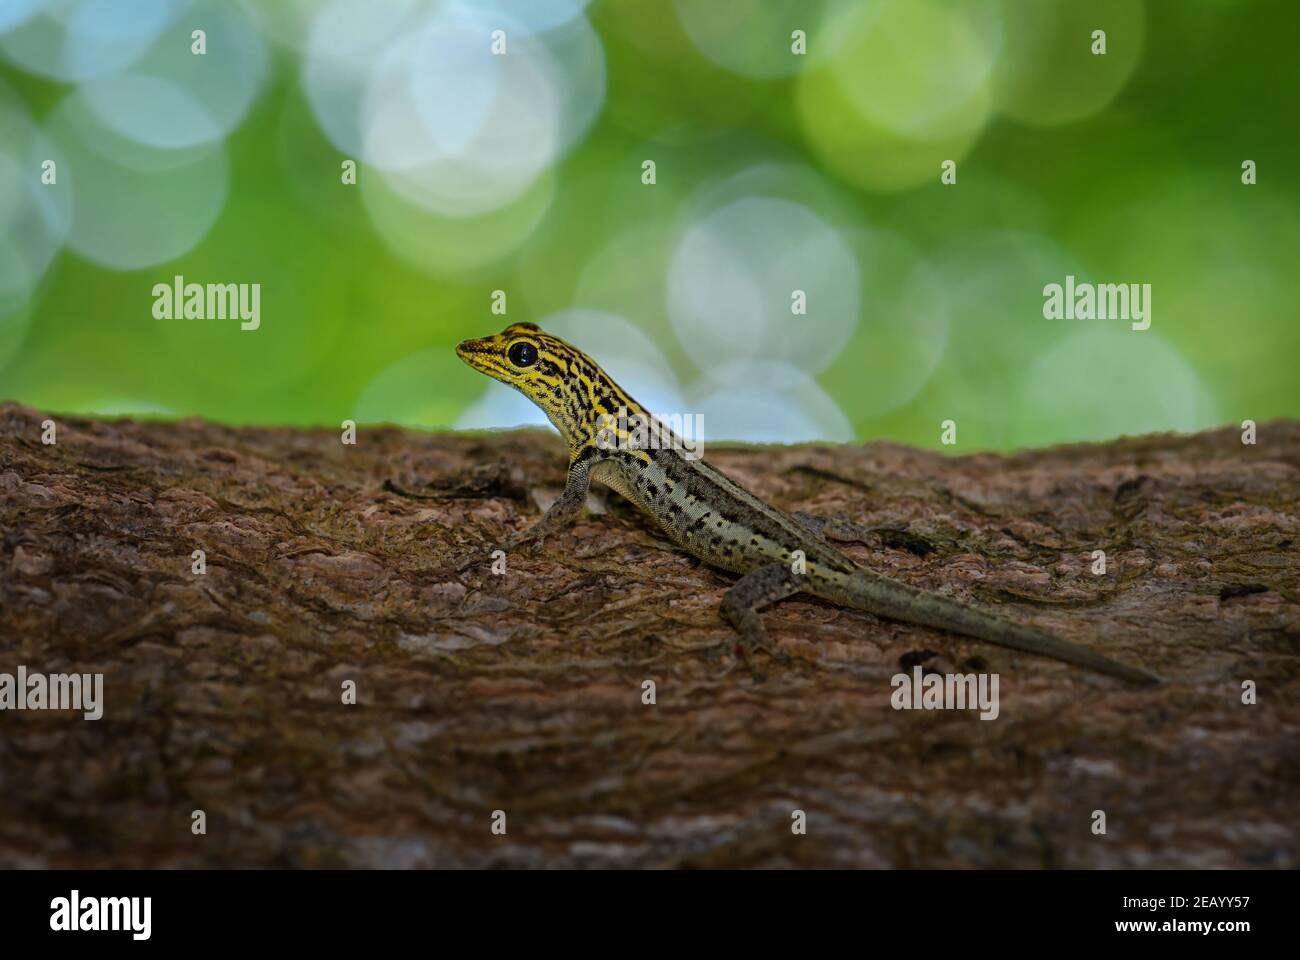 Dwarf yellow-headed gecko - Lygodactylus luteopicturatus, beautiful colored lizard from East African woodlands and forests, Zanzibar, Tanzania. Stock Photo